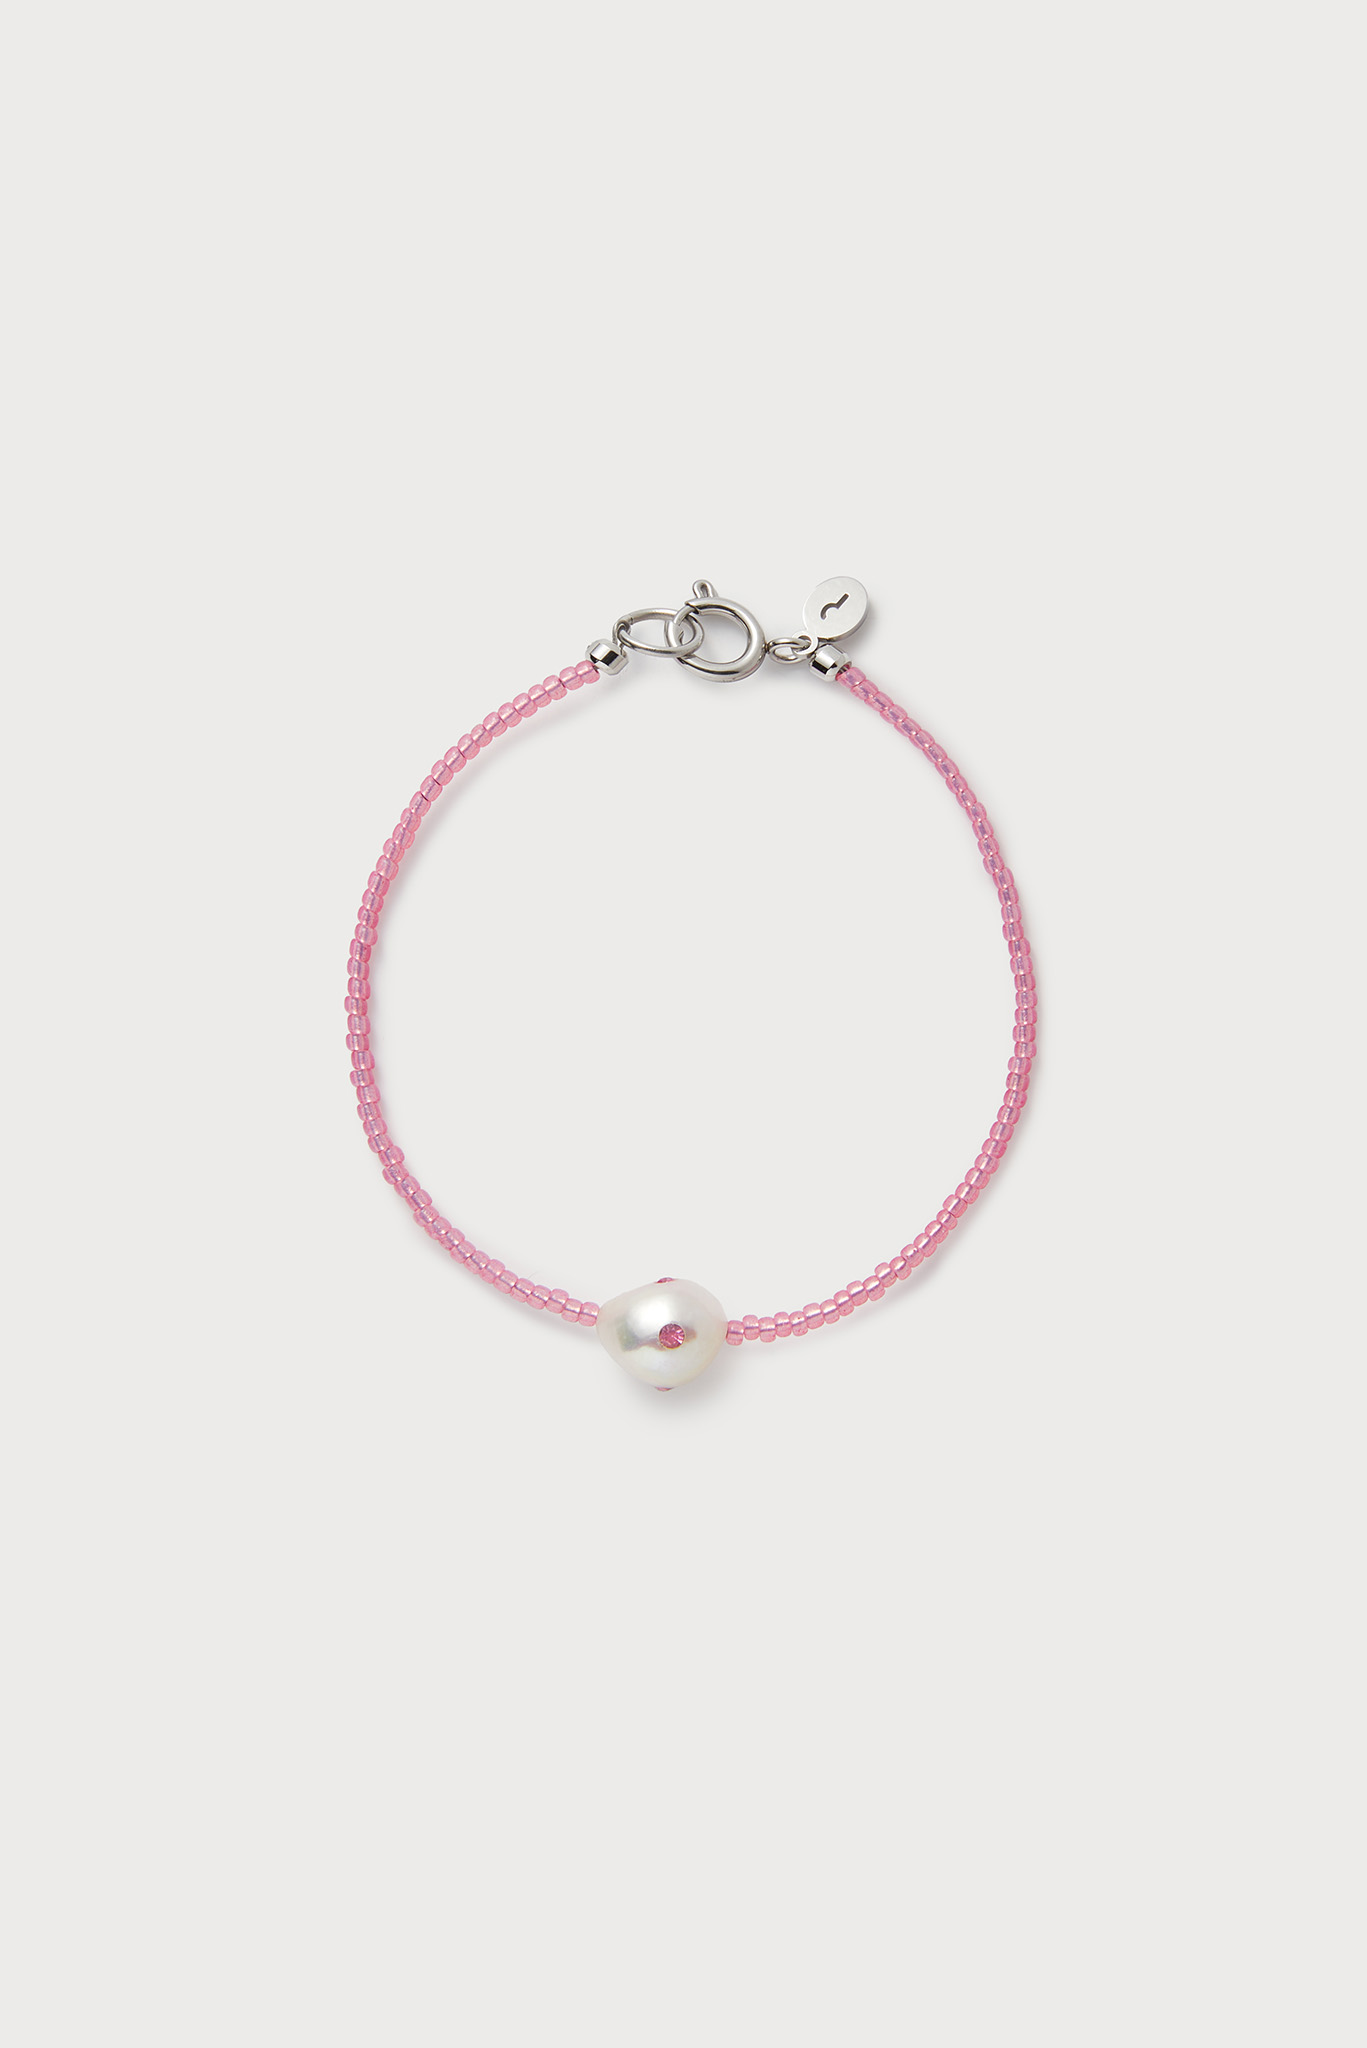 Ashore Bracelet, Pink